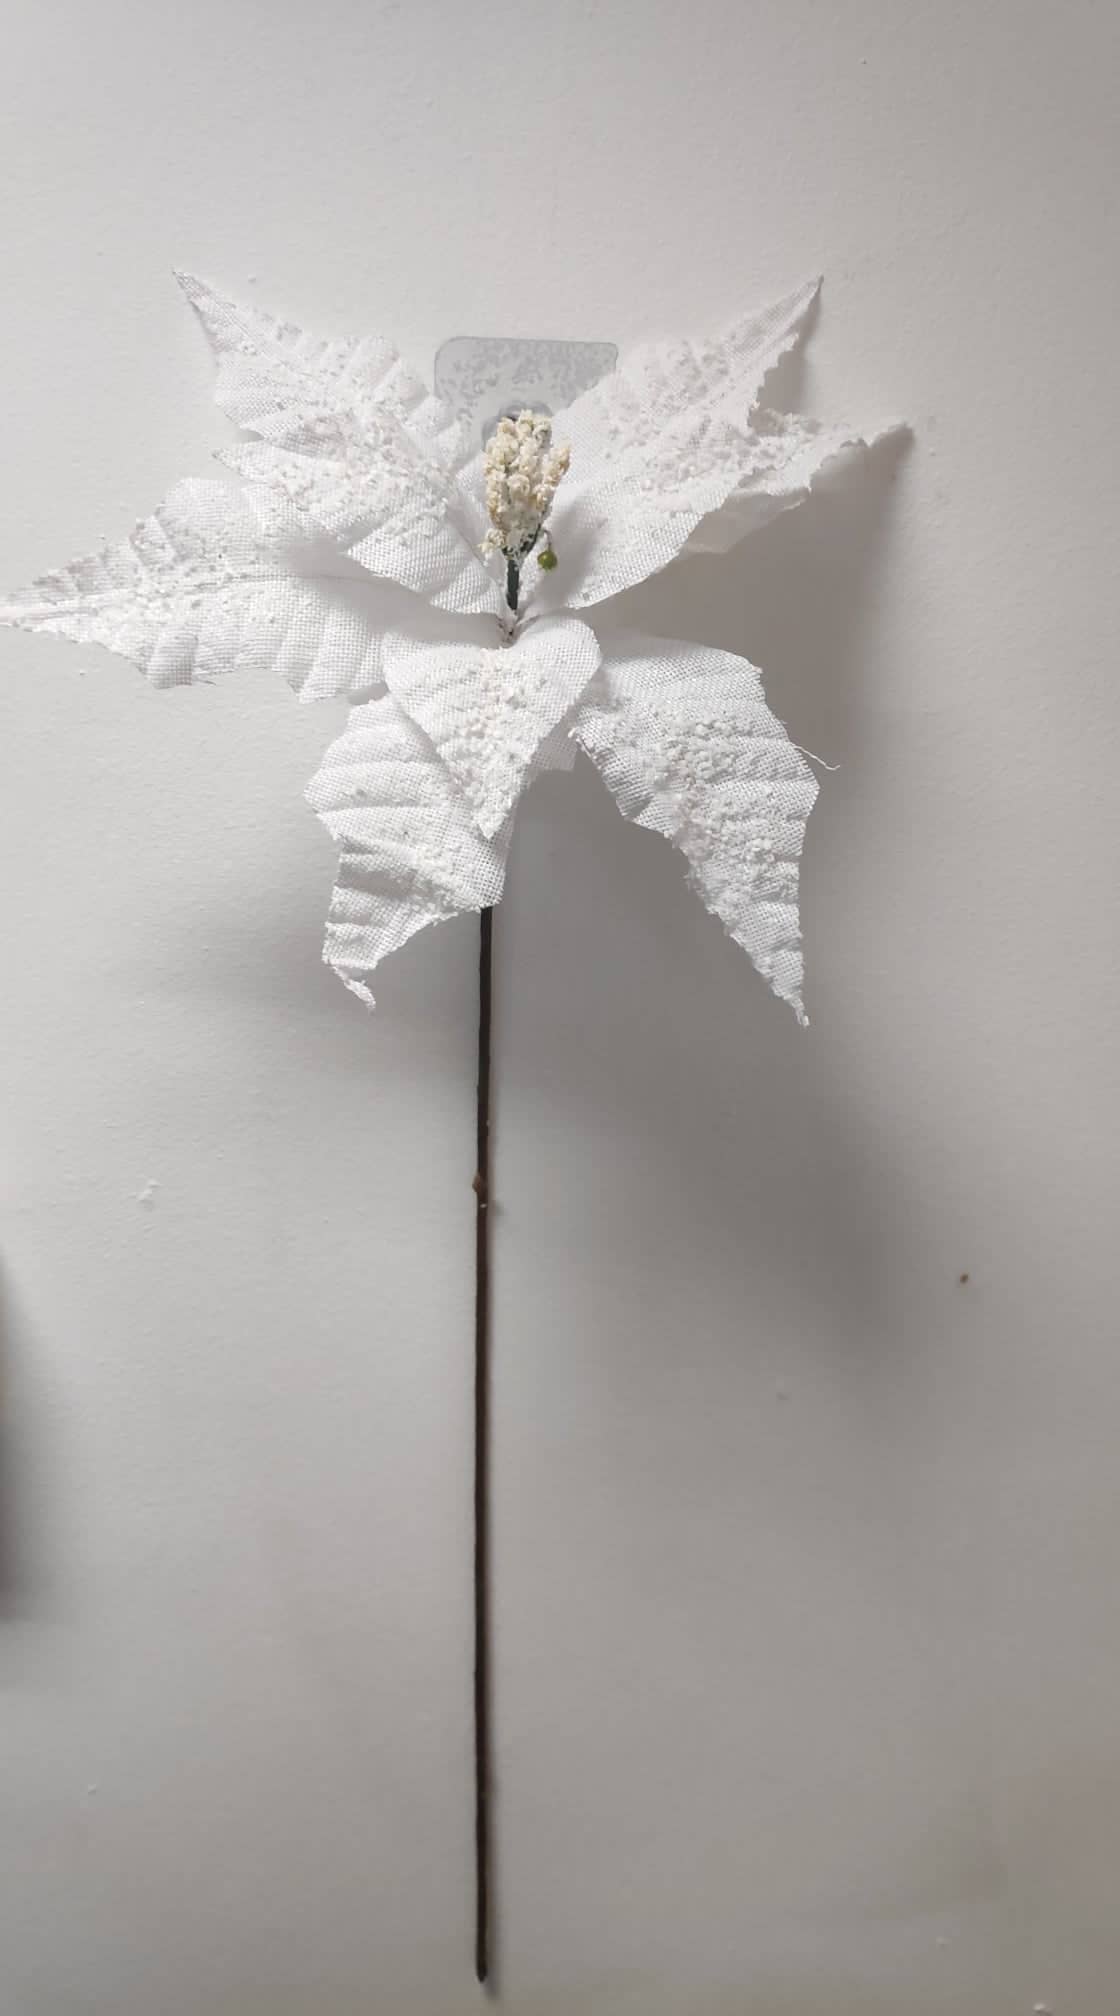 67cm White Poinsettia - Evergreen Silk Plants 67cm White Poinsettia - Artificial 67cm White Poinsettia - Fake 67cm White Poinsettia - plants 67cm White Poinsettia - trees 67cm White Poinsettia - flowers 67cm White Poinsettia - greenery 